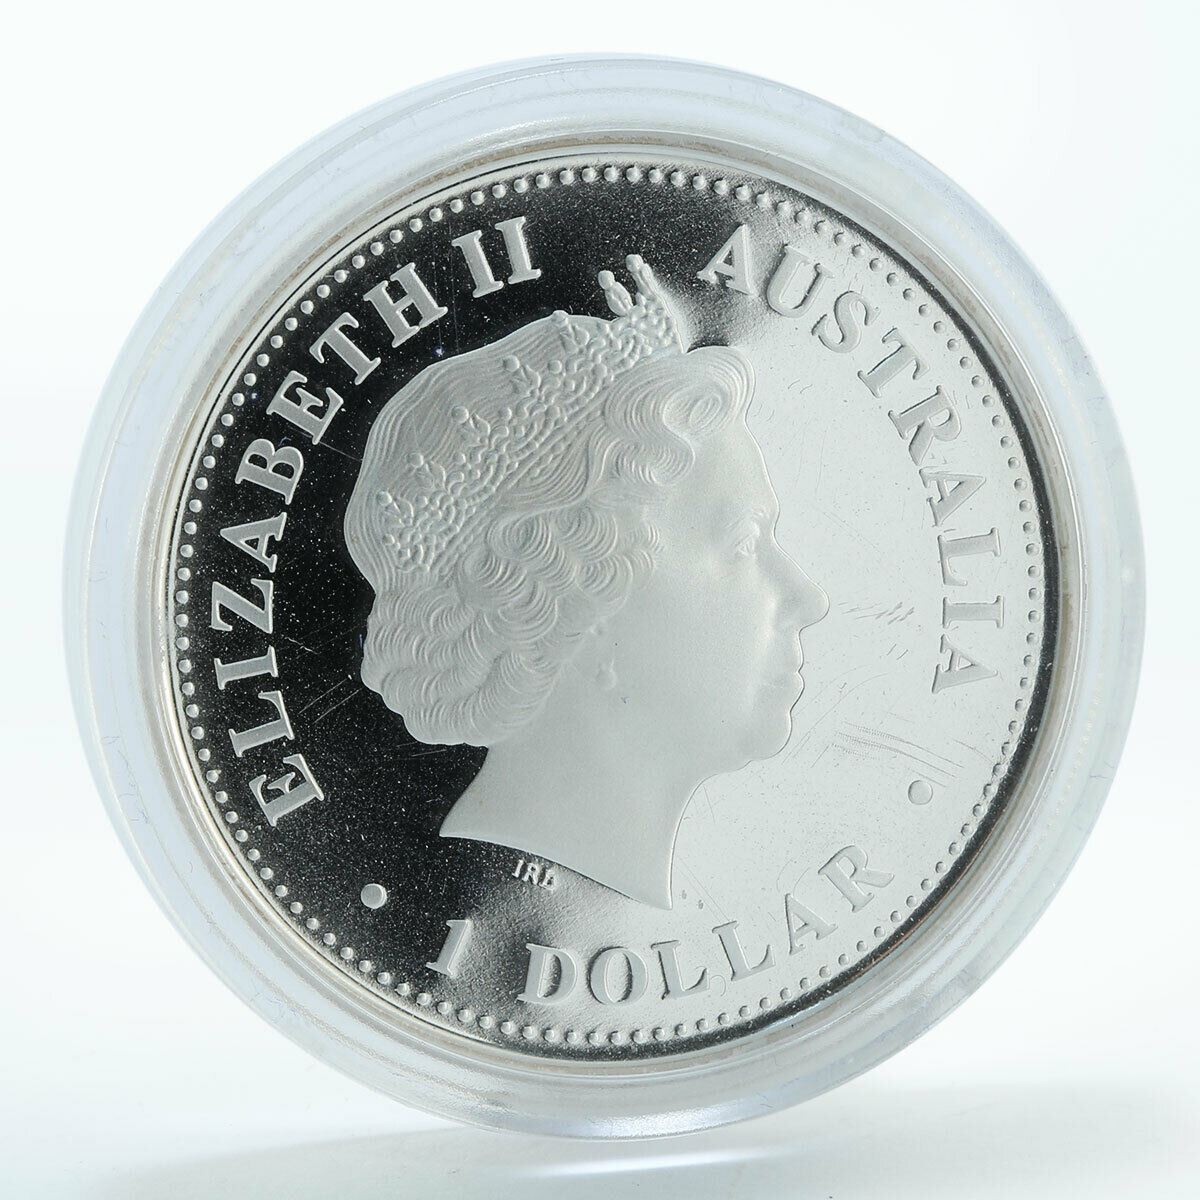 Australia 1 dollar Leopard seal coloured silver coin 2005